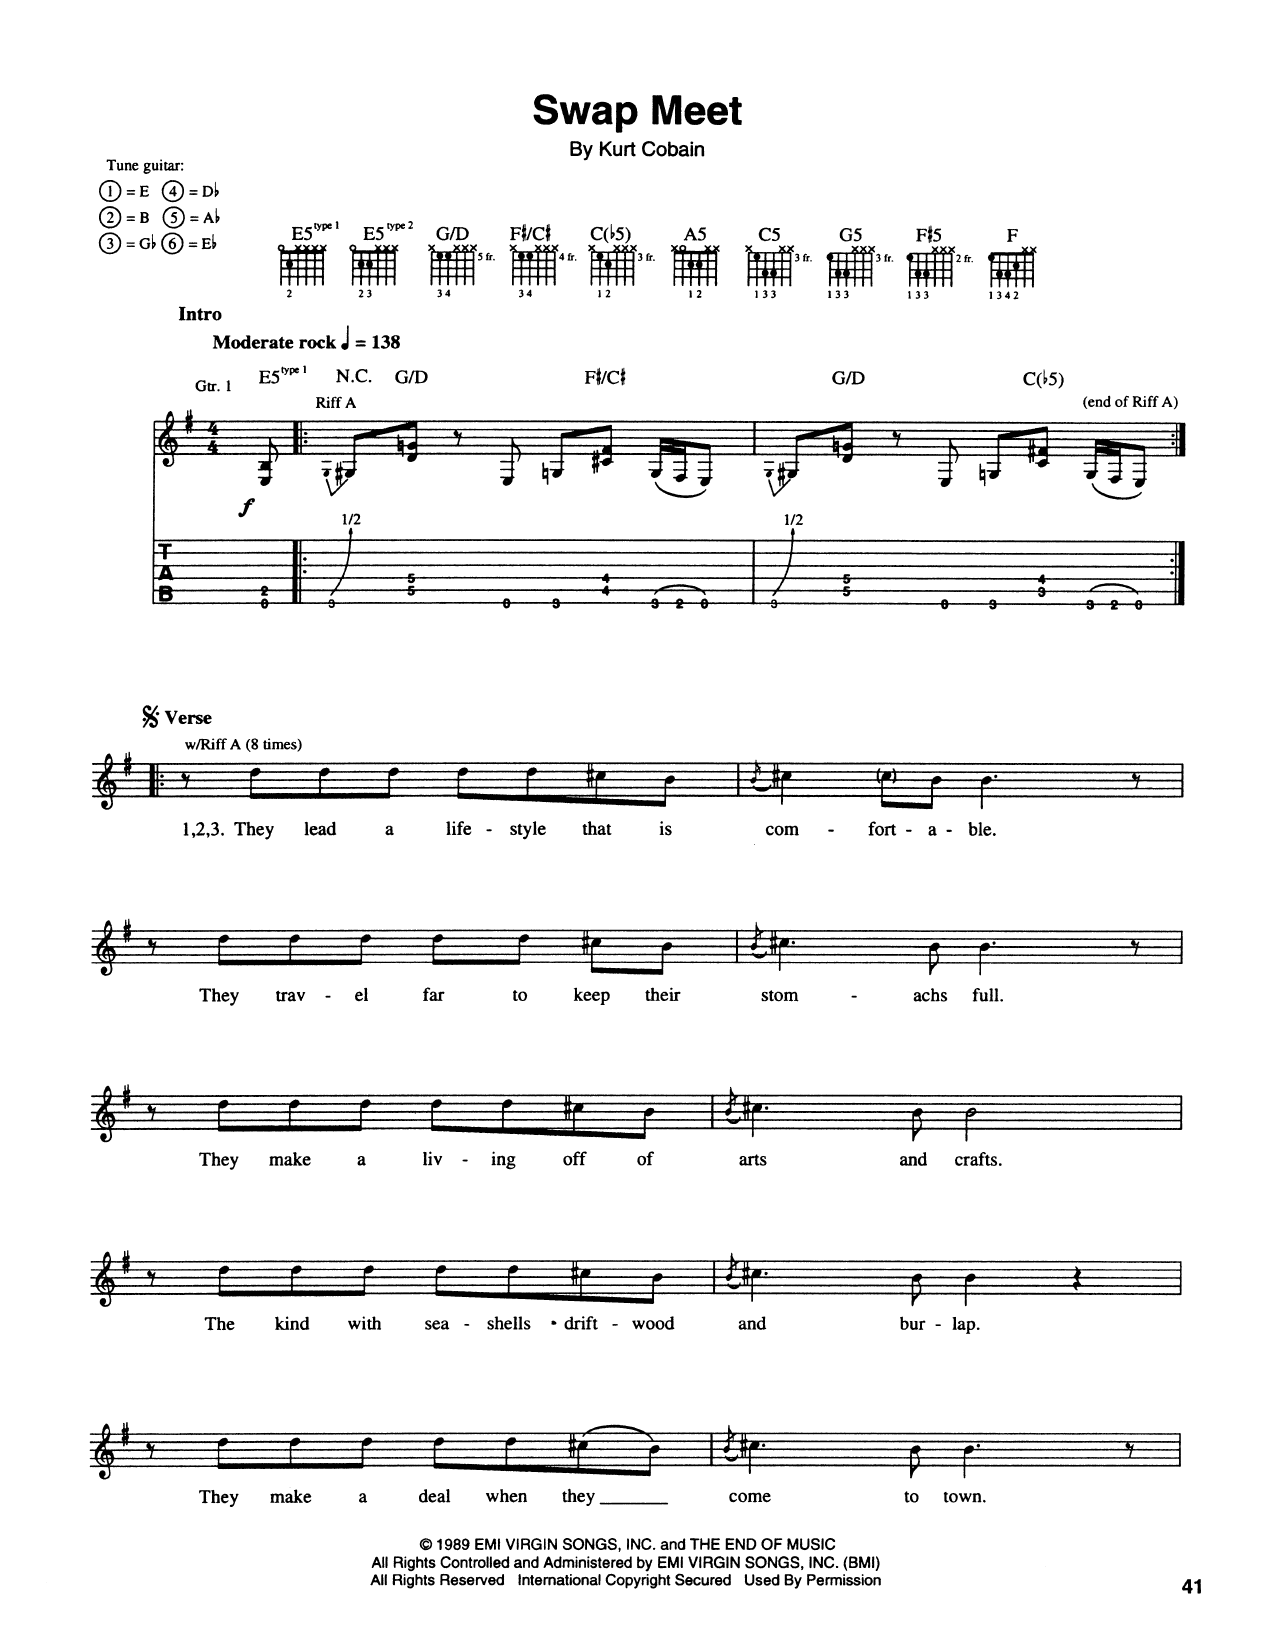 Nirvana Swap Meet Sheet Music Notes & Chords for Guitar Tab - Download or Print PDF